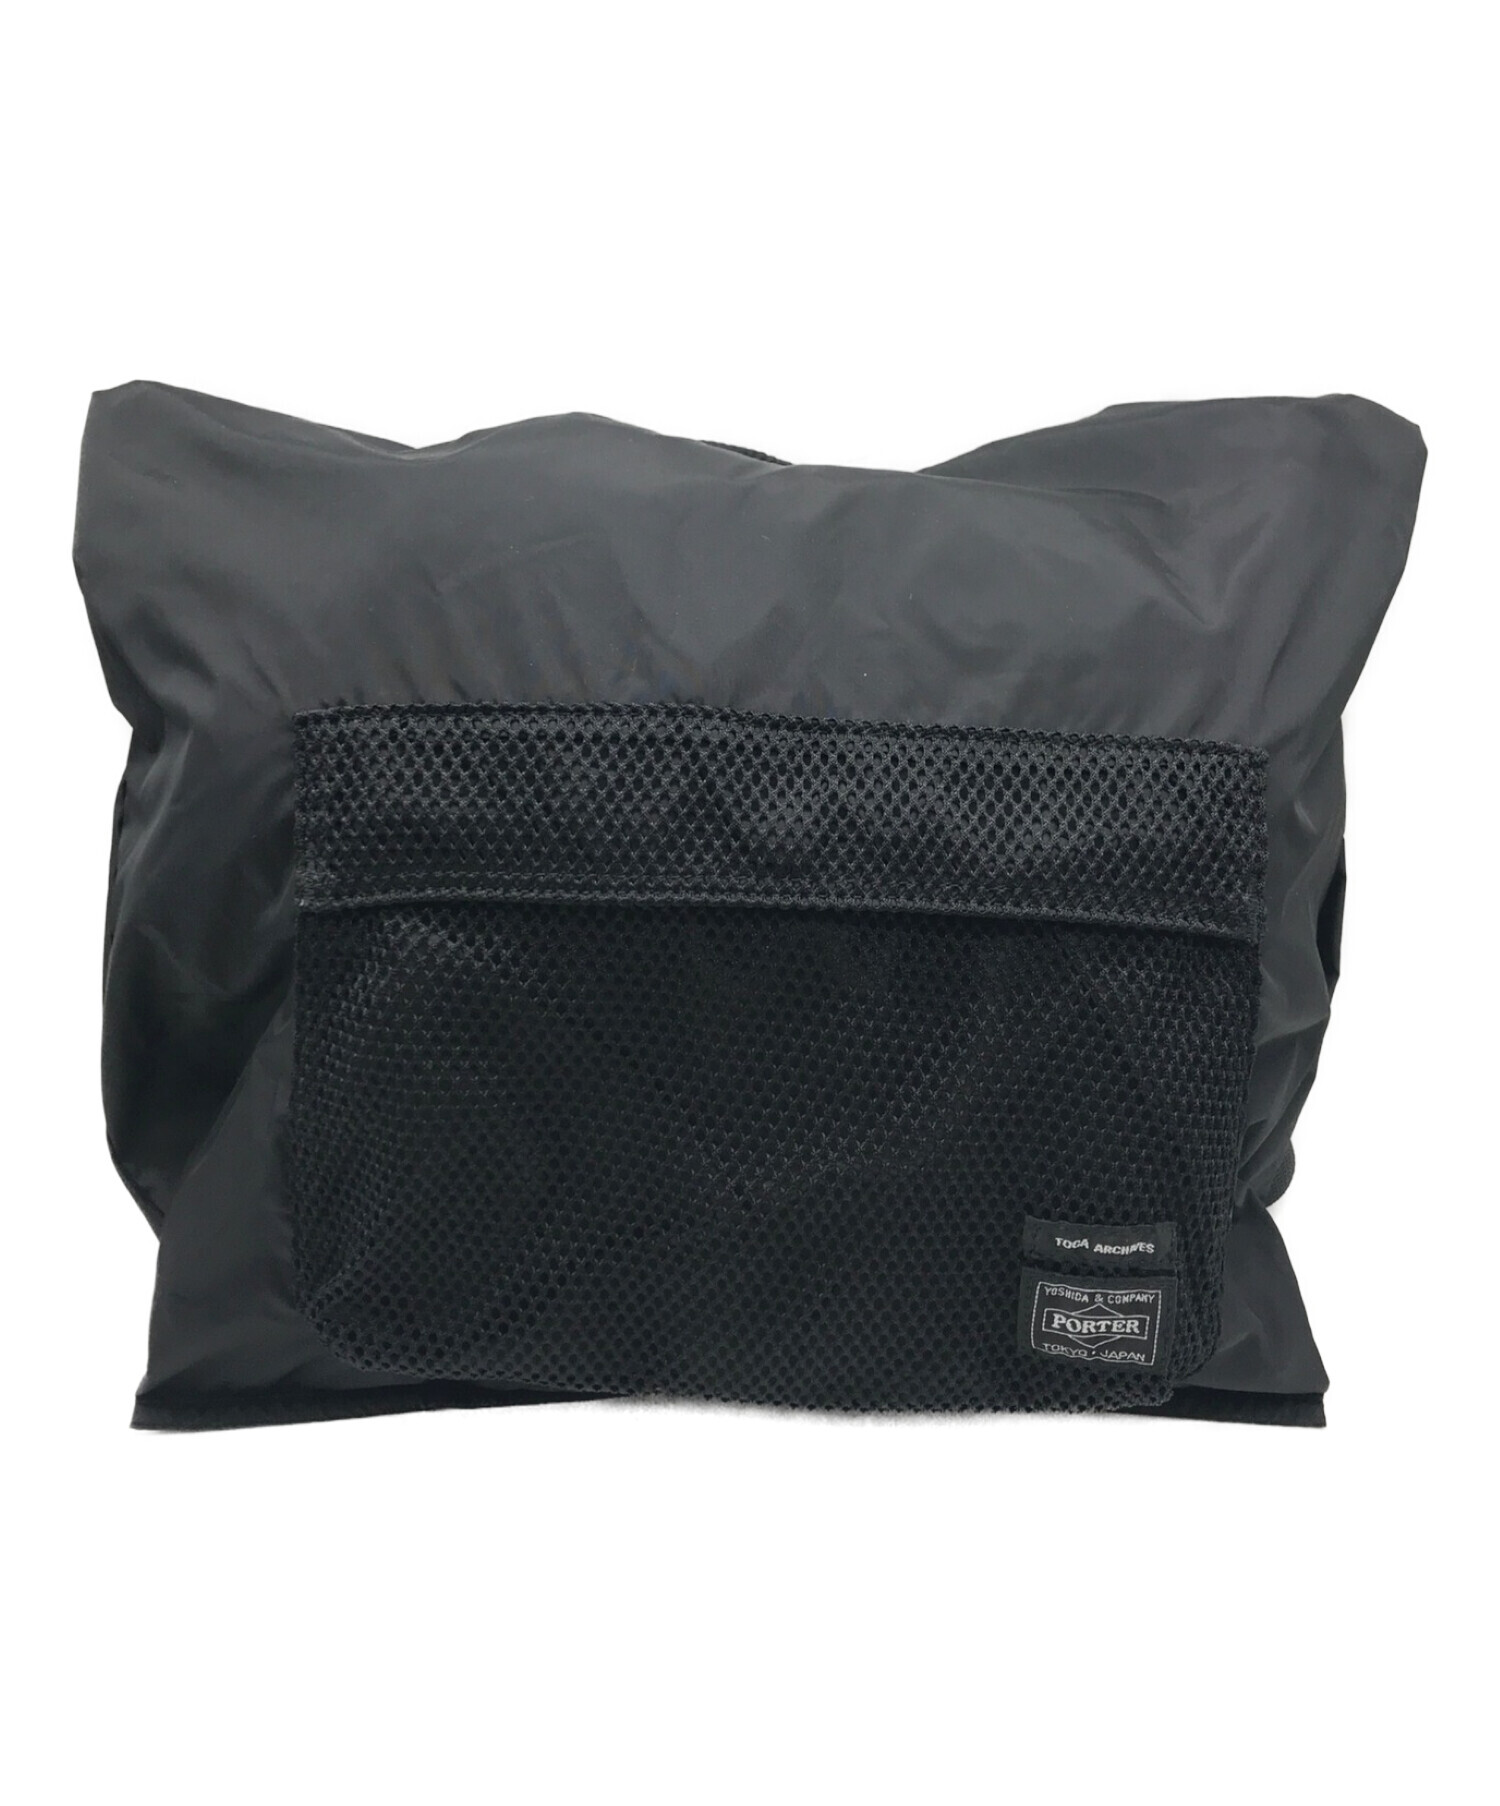 TOGA×PORTER (トーガ × ポーター) Packable bag / パッカブルバッグ ブラック